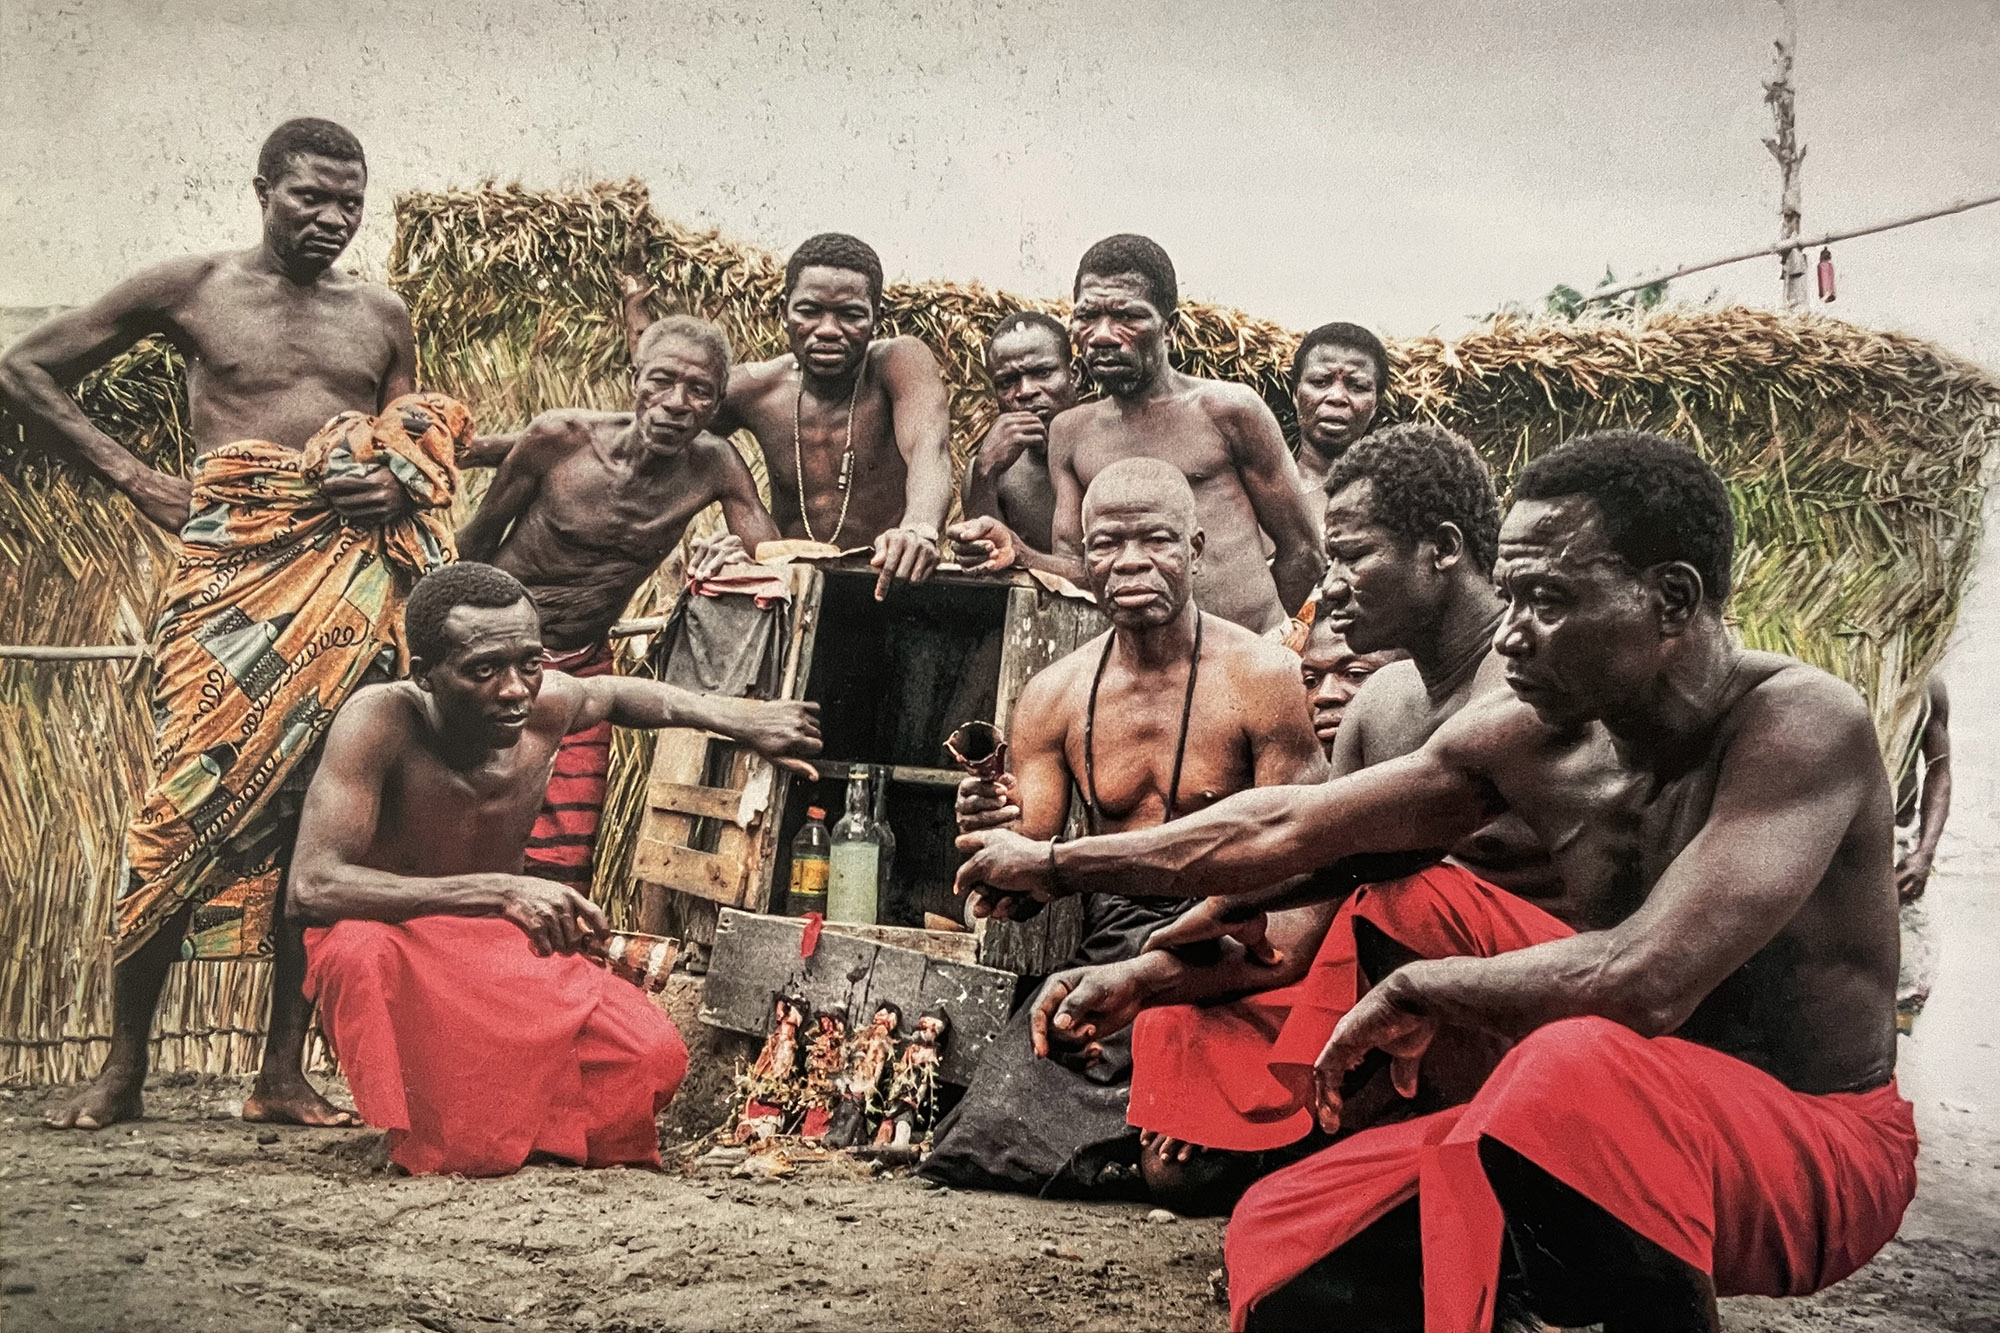 Ceremony for Vodu Adela, the hunter deity. Nyanko, Ghana 1999. Photo: Christian Siegenthaler